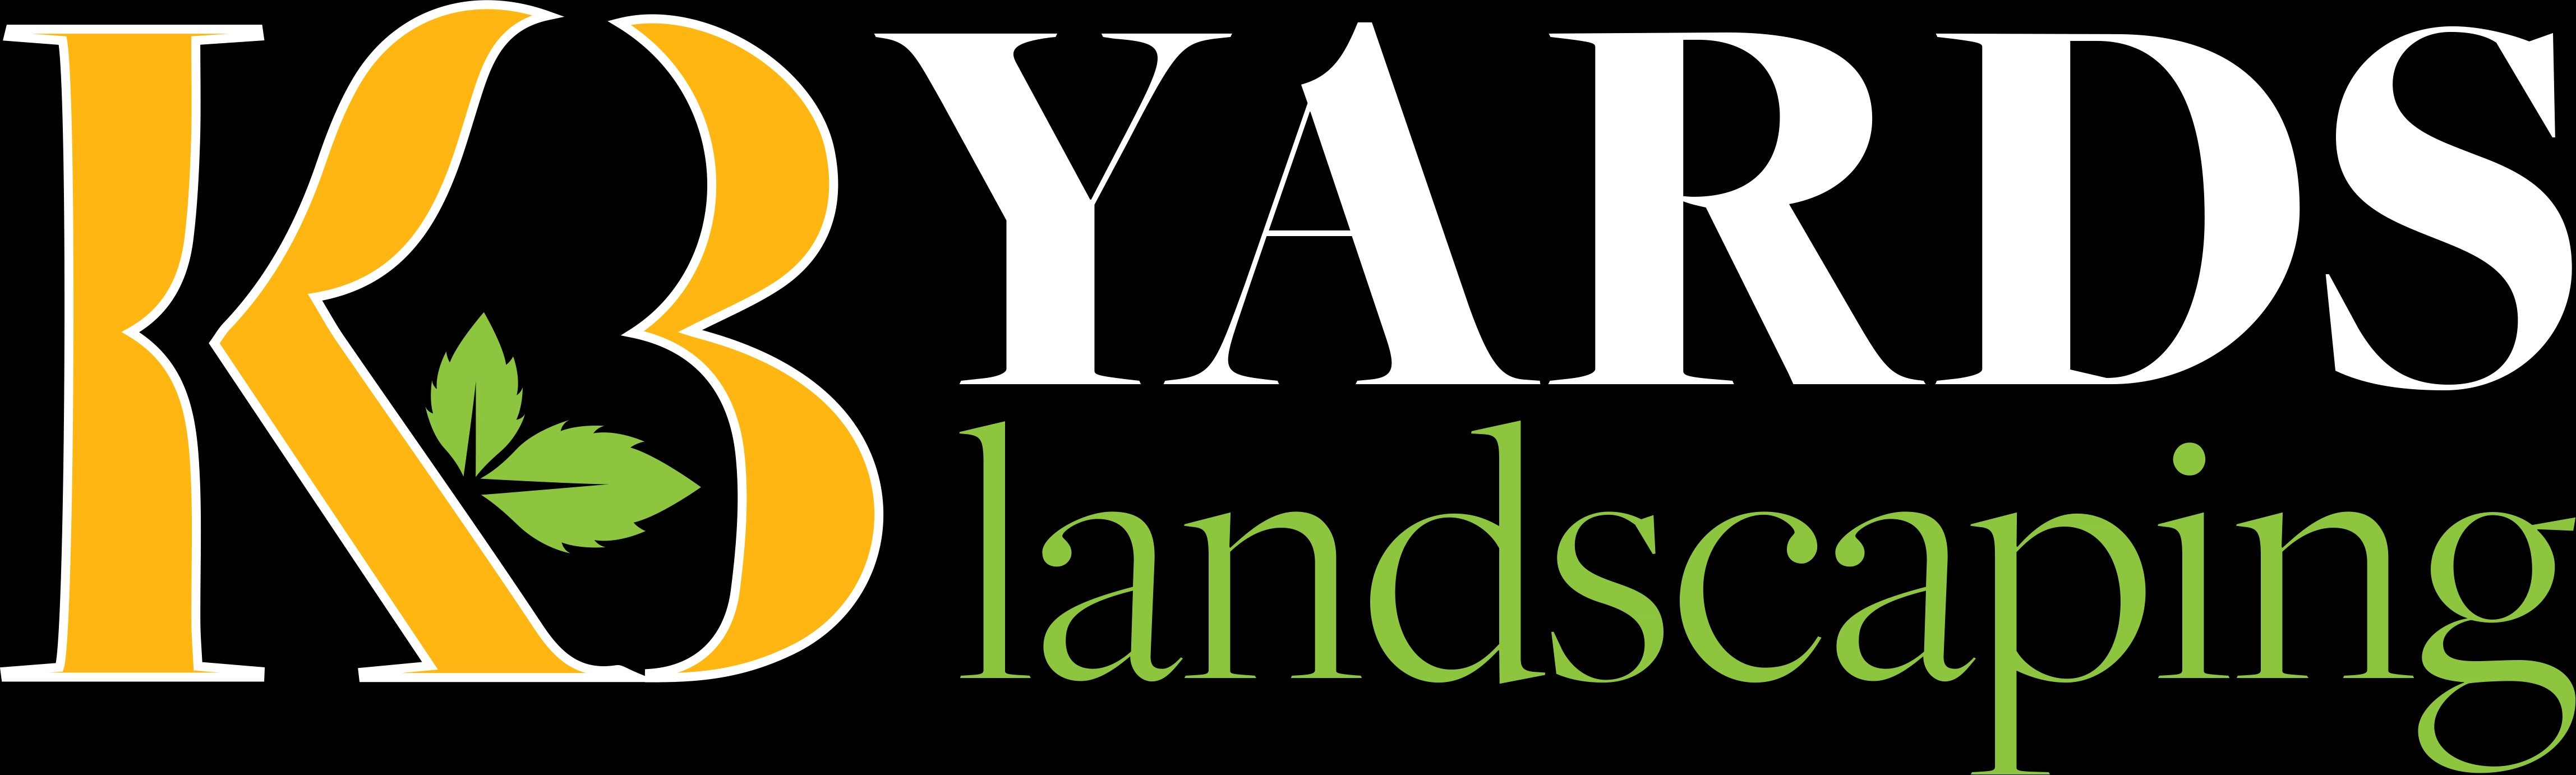 KB Yards Landscaping Logo